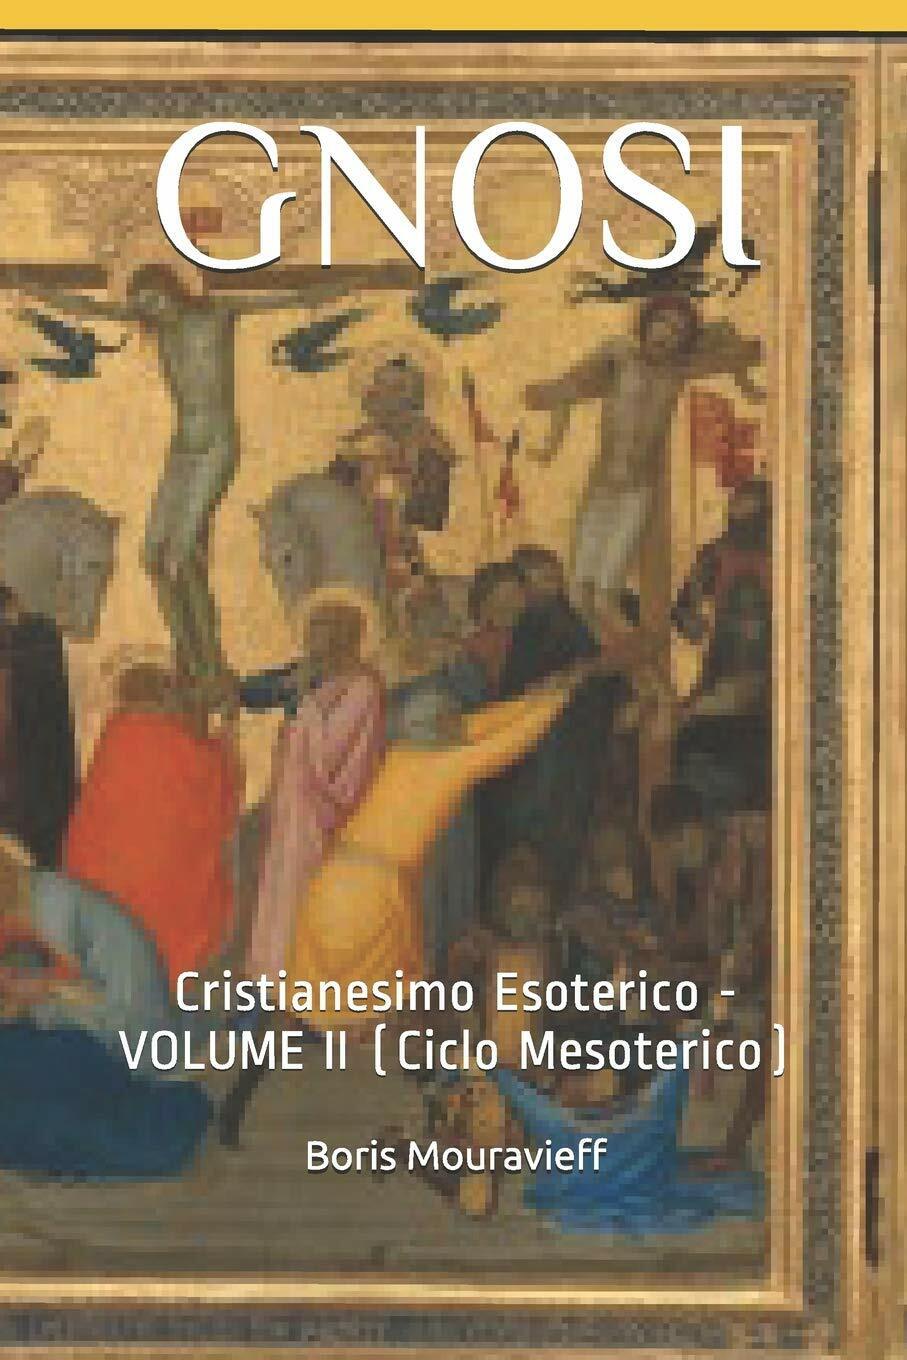 Gnosi: Cristianesimo Esoterico - Volume II (Ciclo Mesoterico) di Boris Mouravief